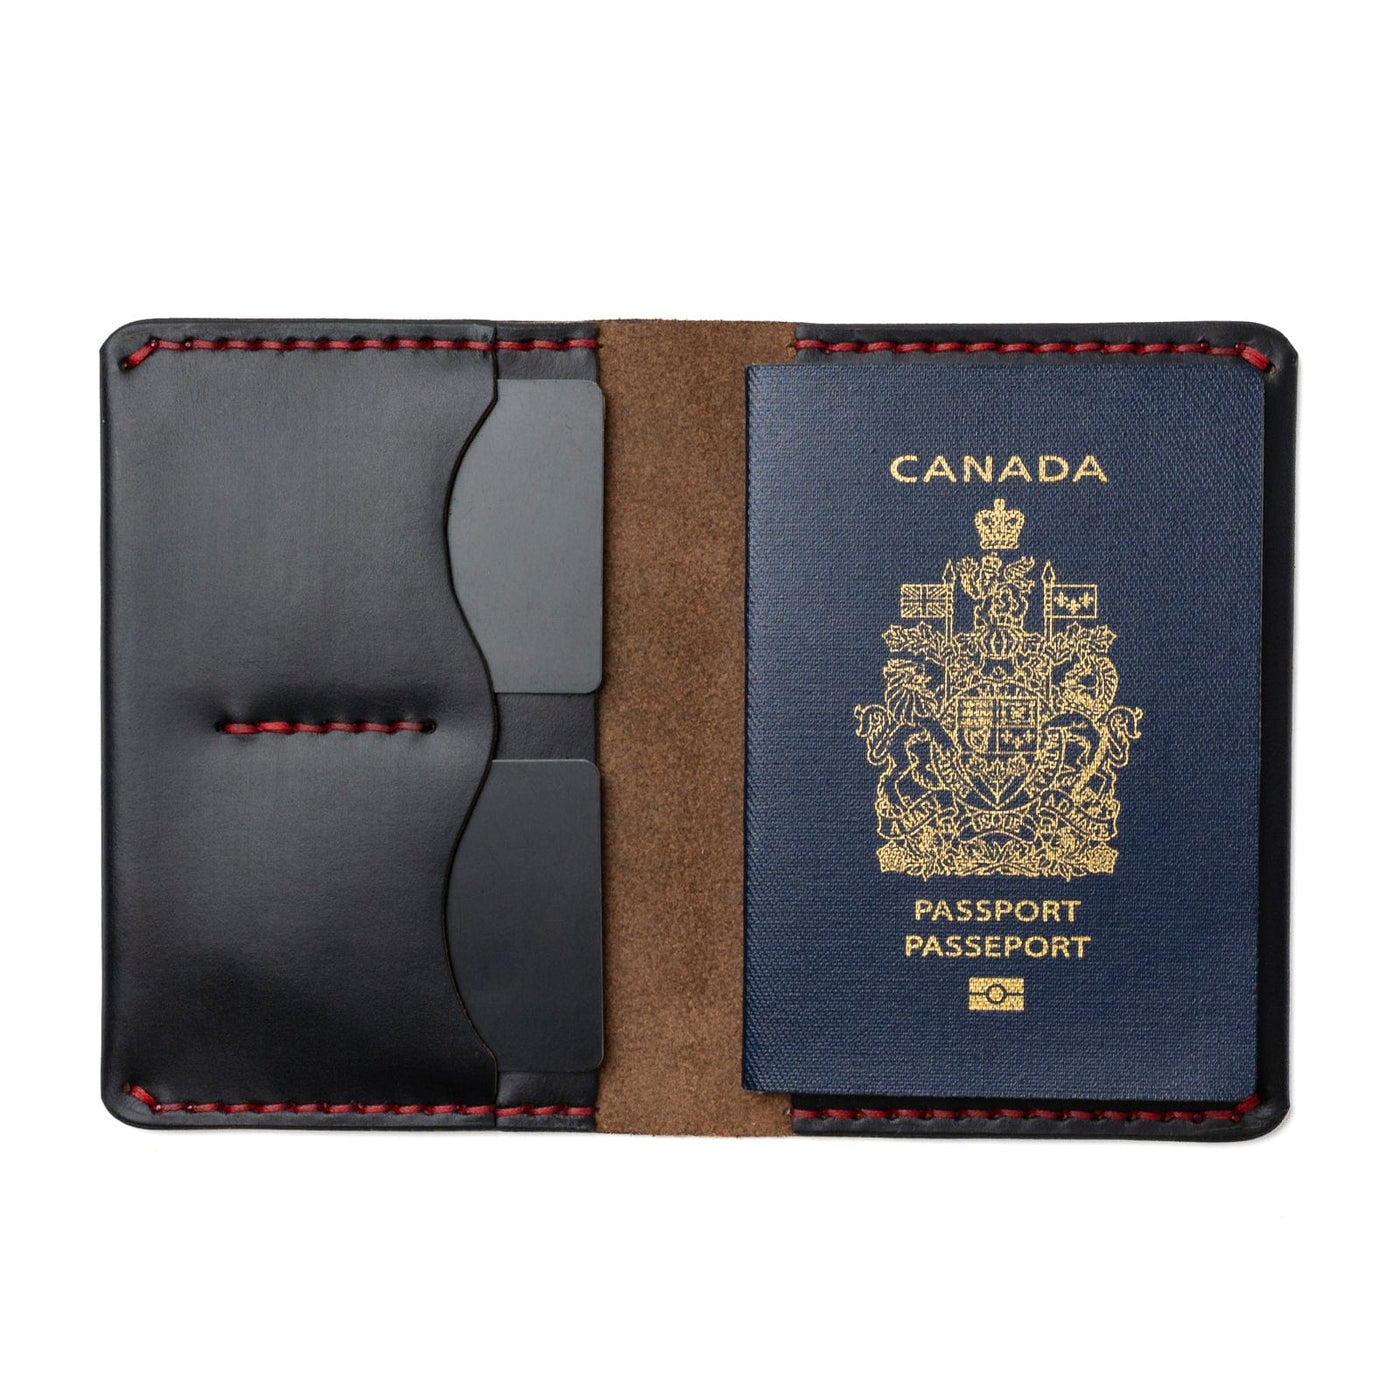 Leather Passport Cover - Black Popov Leather